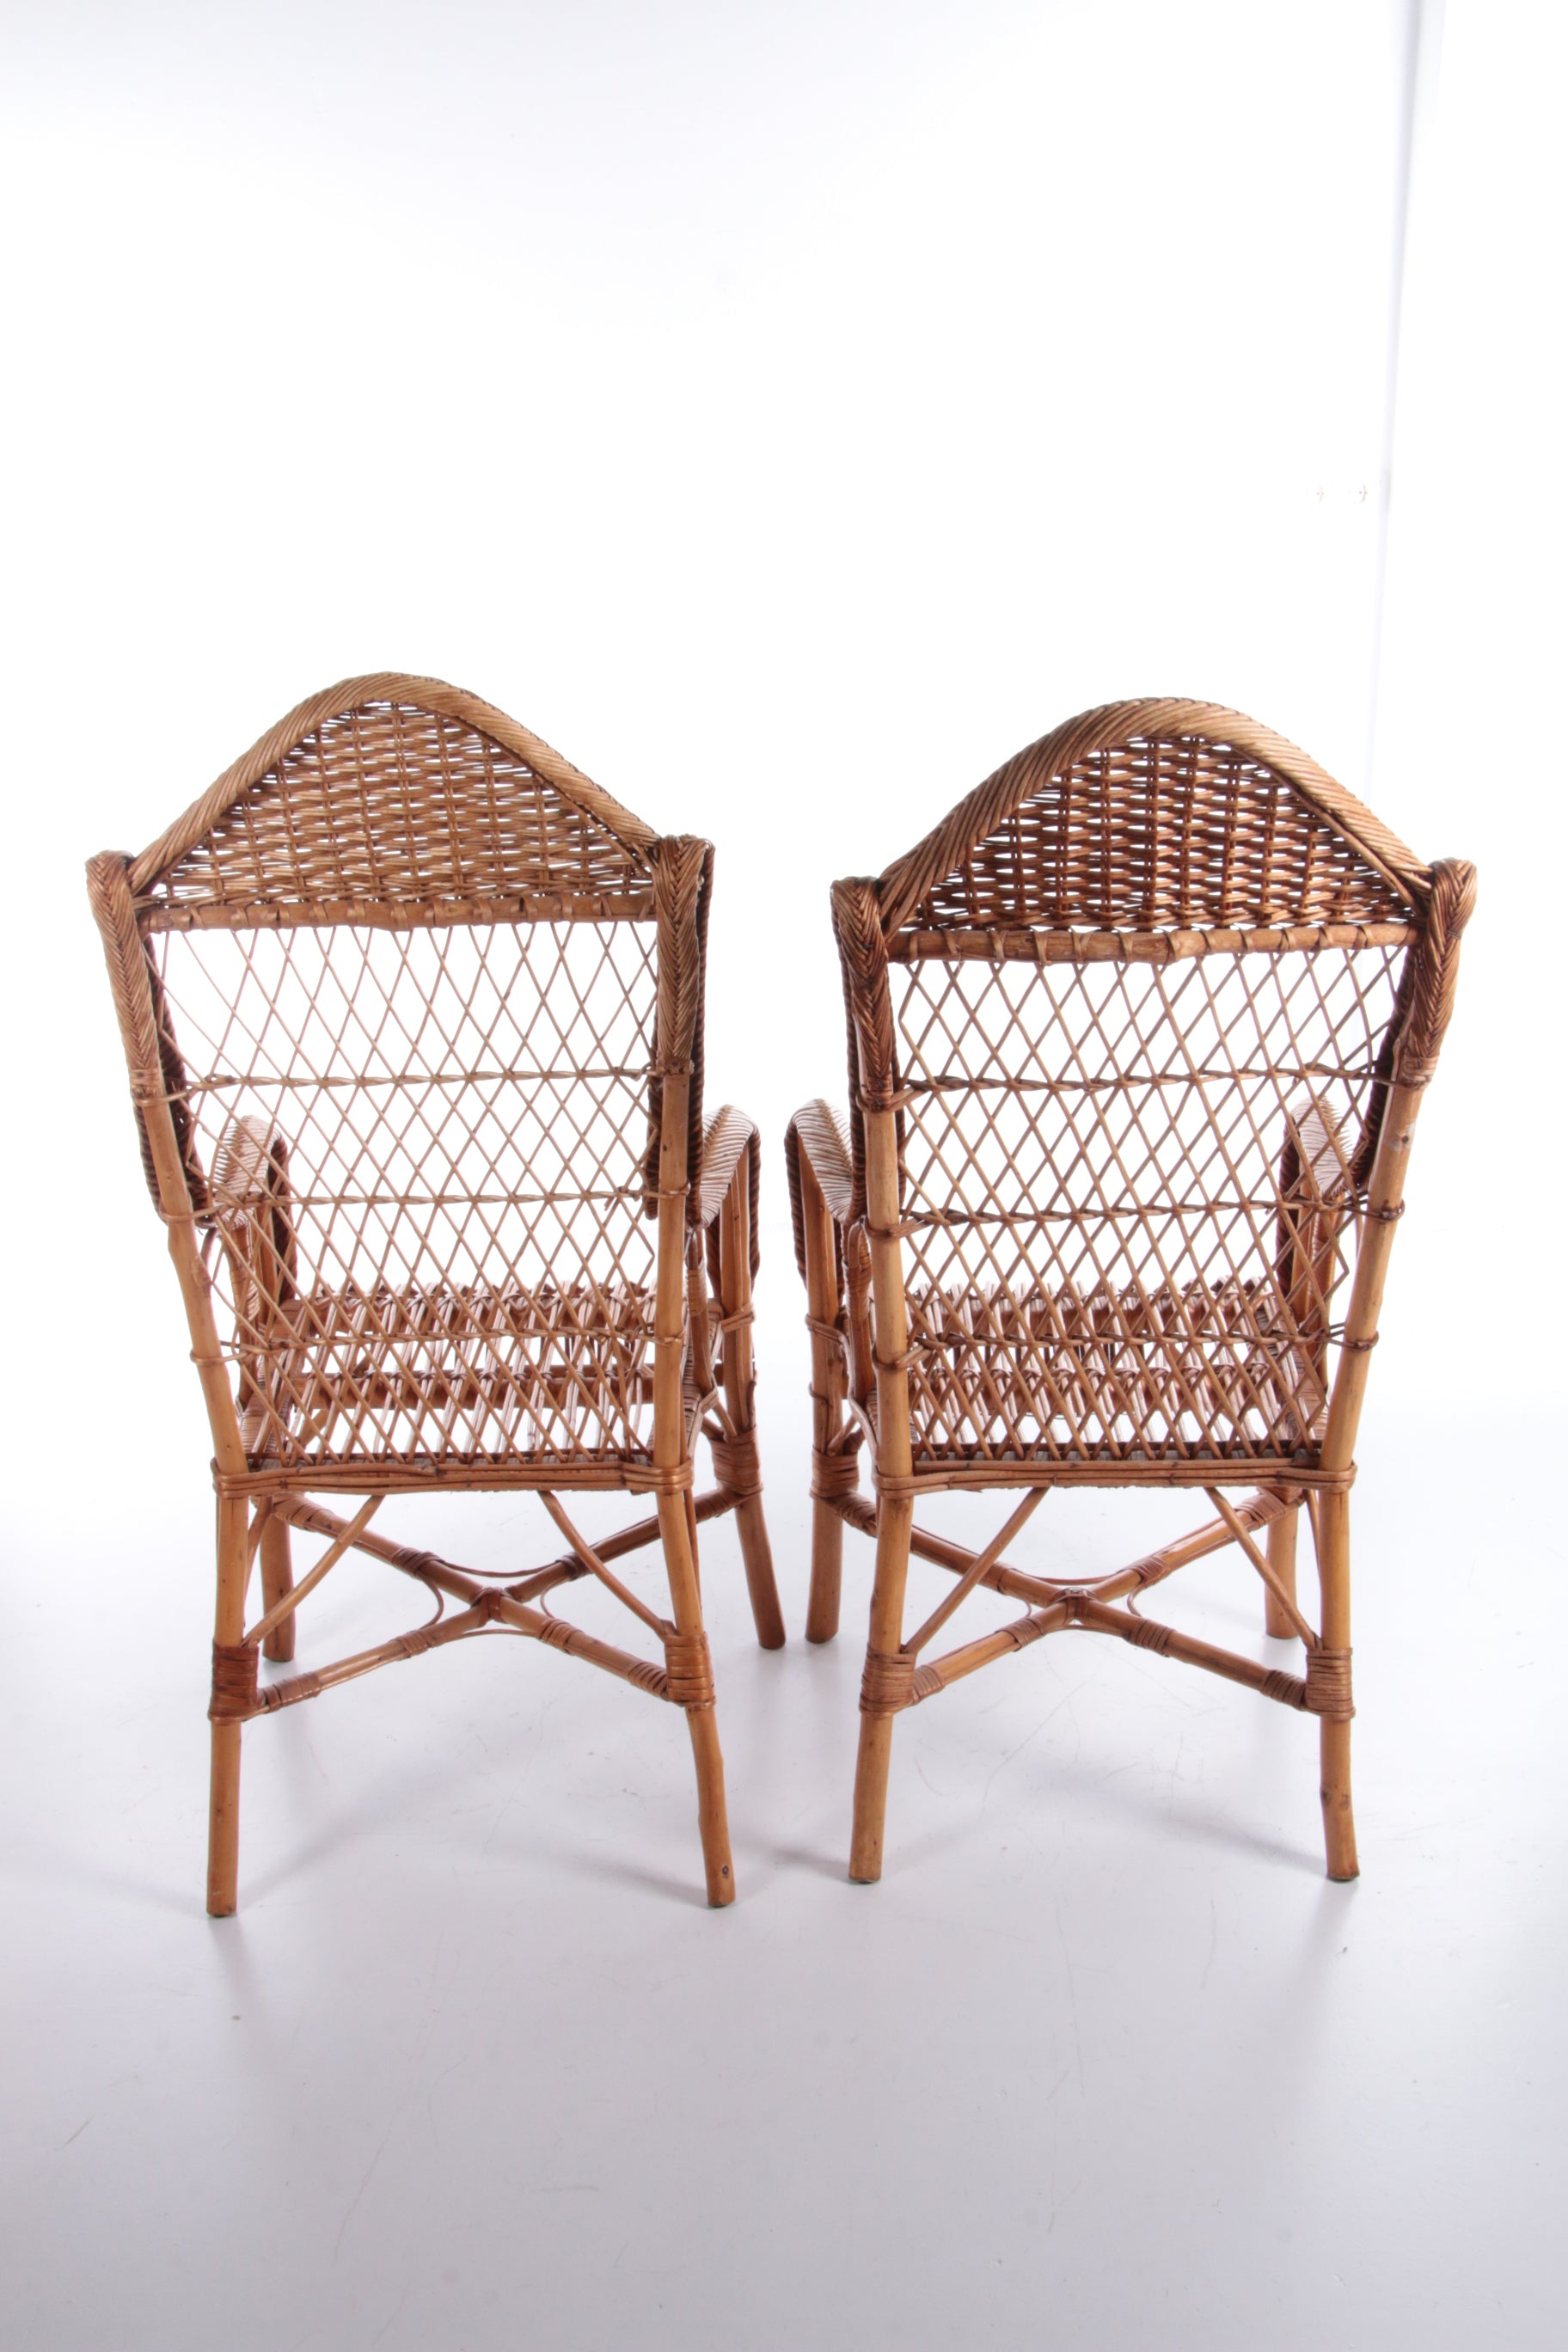 Vintage set van 2 Rotan stoelen gemaakt rond 1960s,Nederland.